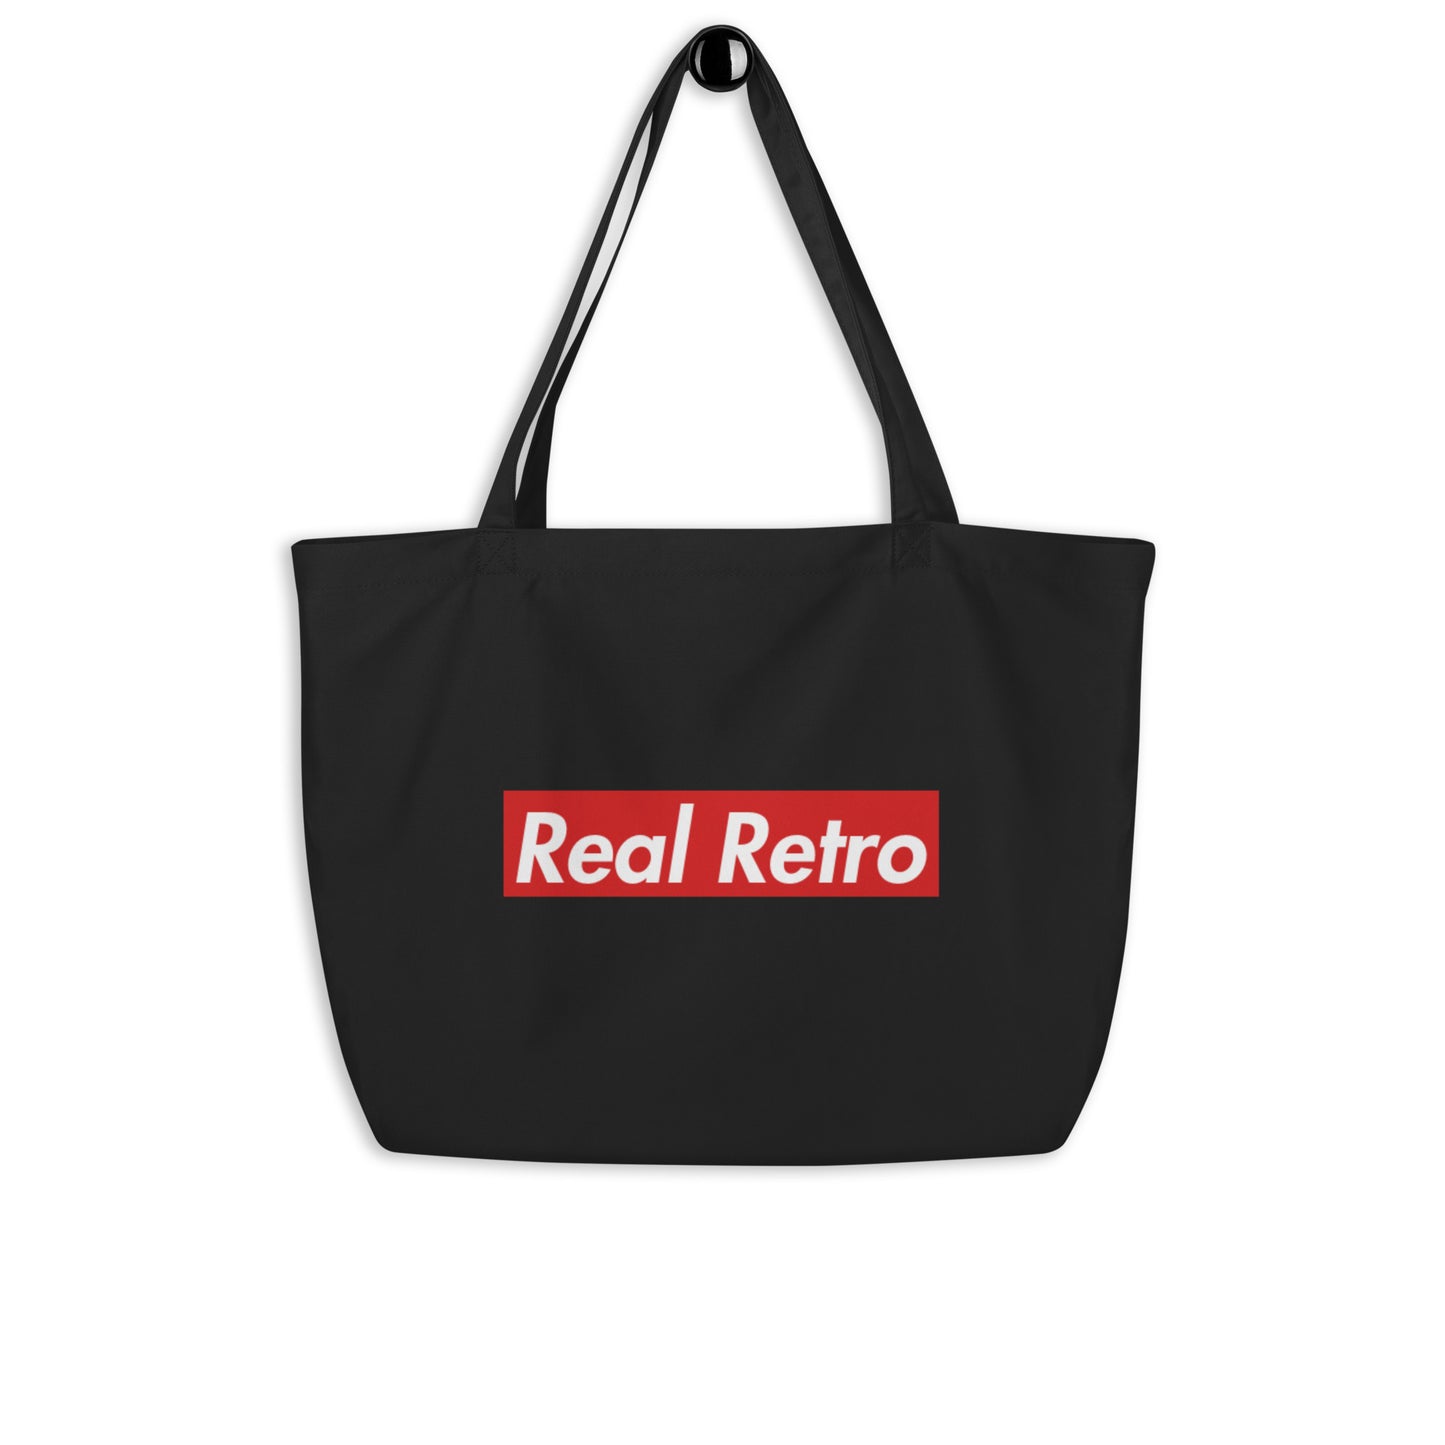 Real Retro Eco Large organic tote bag